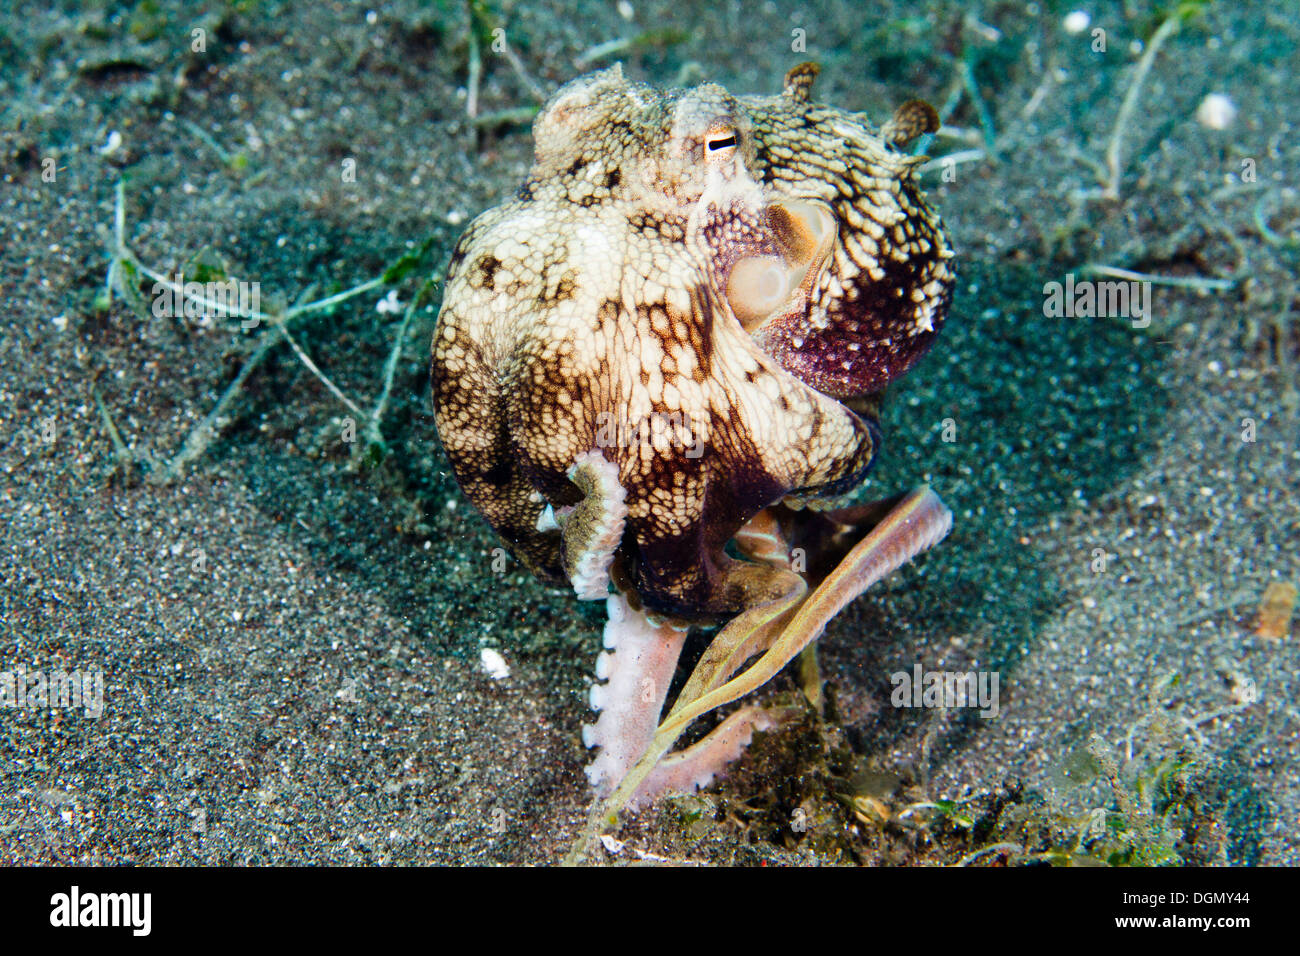 Coconut octopus - Amphioctopus marginatus, showing bipedal motion, Lembeh Strait, Indonesia Stock Photo